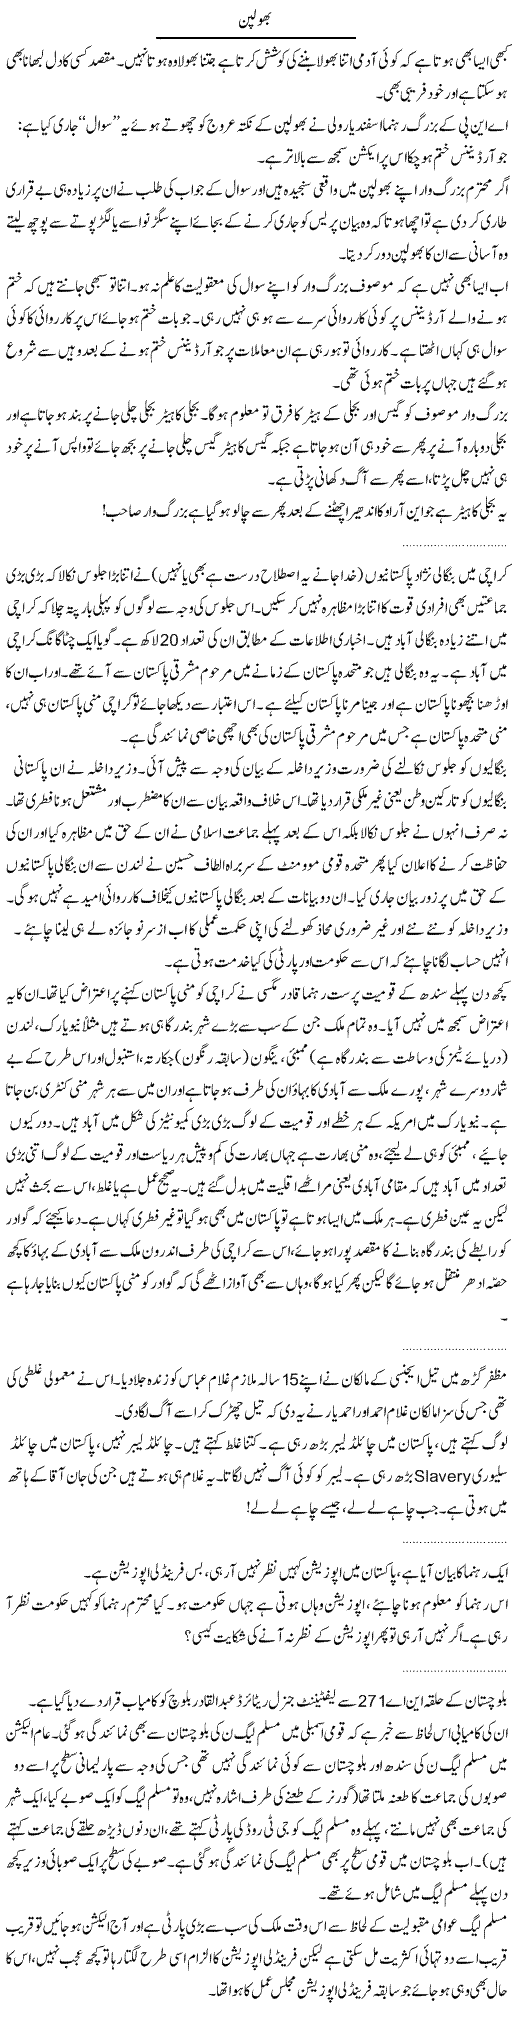 Bholpan Express Column Abdullah Tariq 28 jan 2010